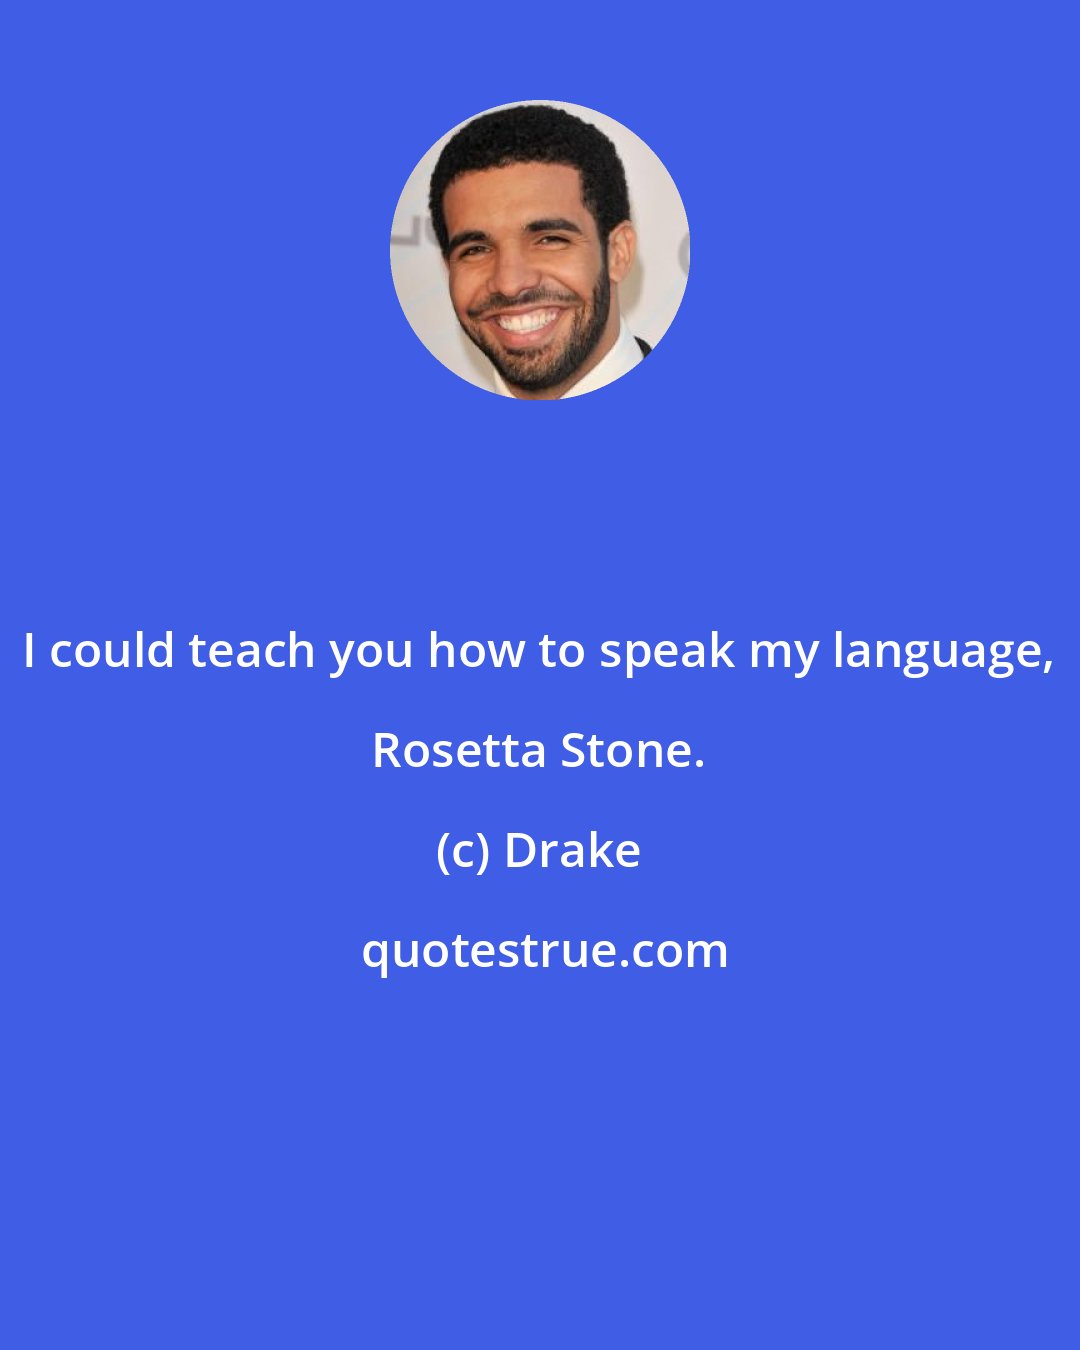 Drake: I could teach you how to speak my language, Rosetta Stone.